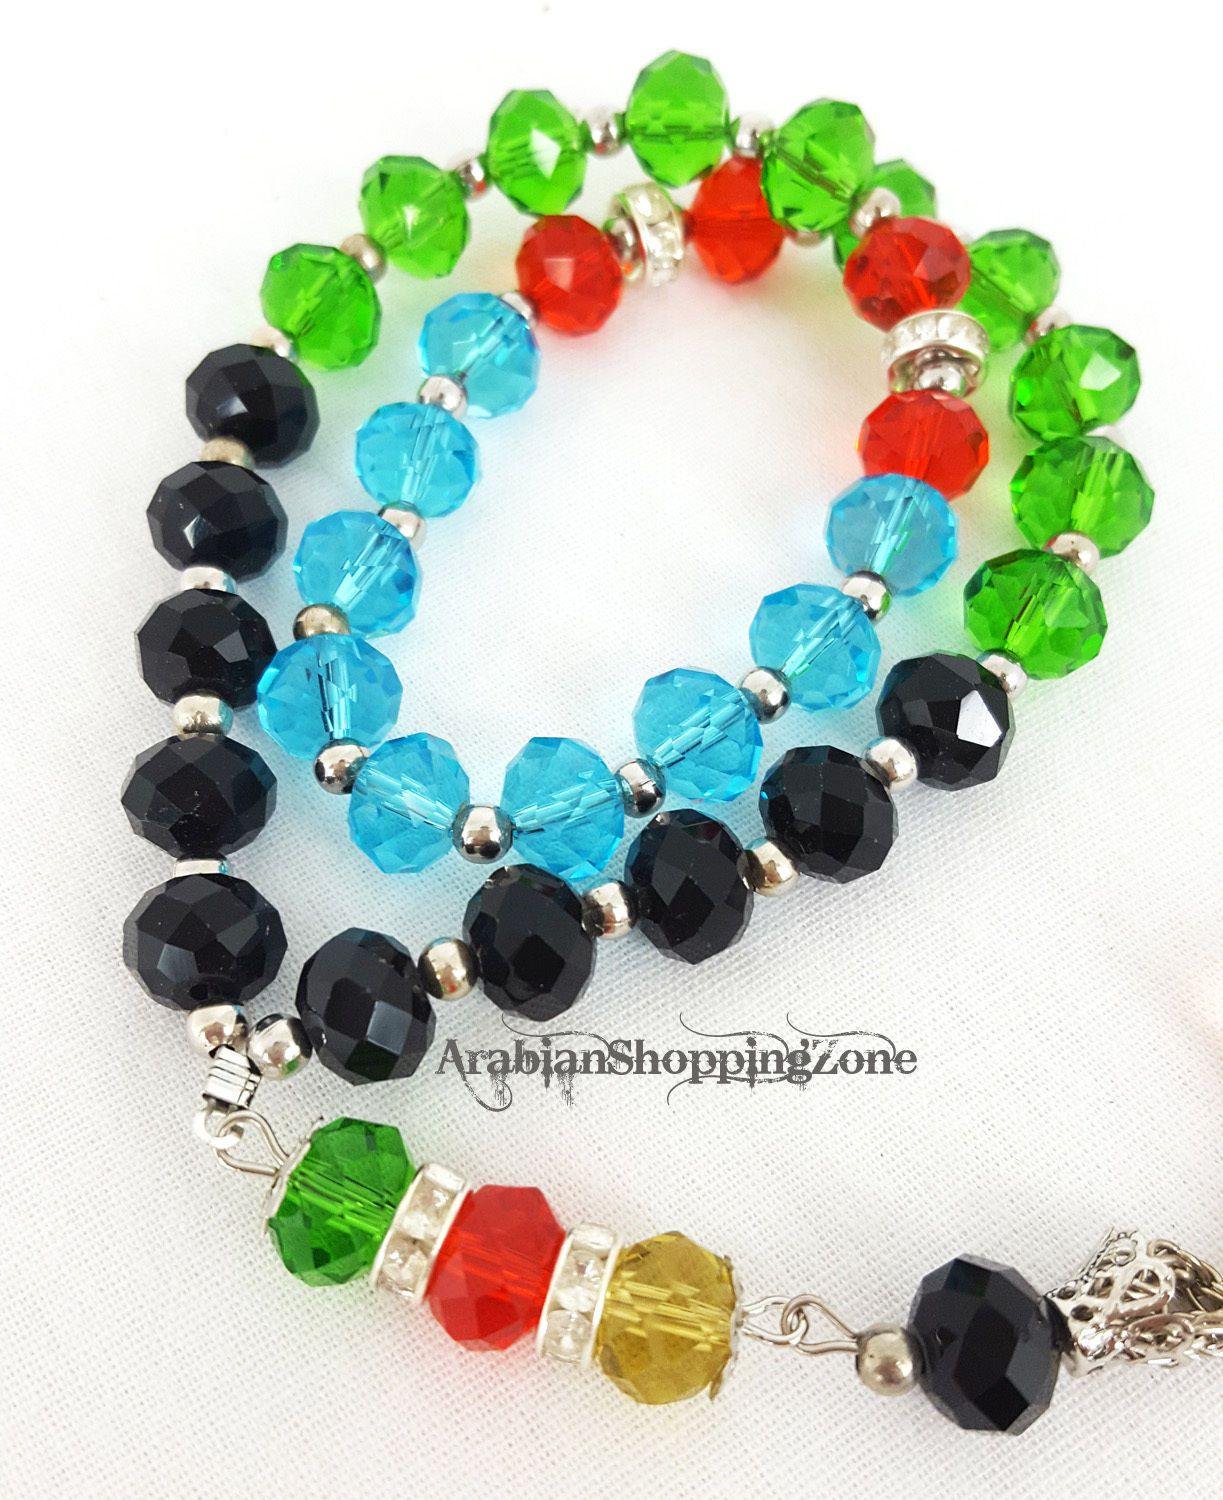 Islamic Salah 10mm Crystal Multi-Colored Prayer Beads 33 - Arabian Shopping Zone